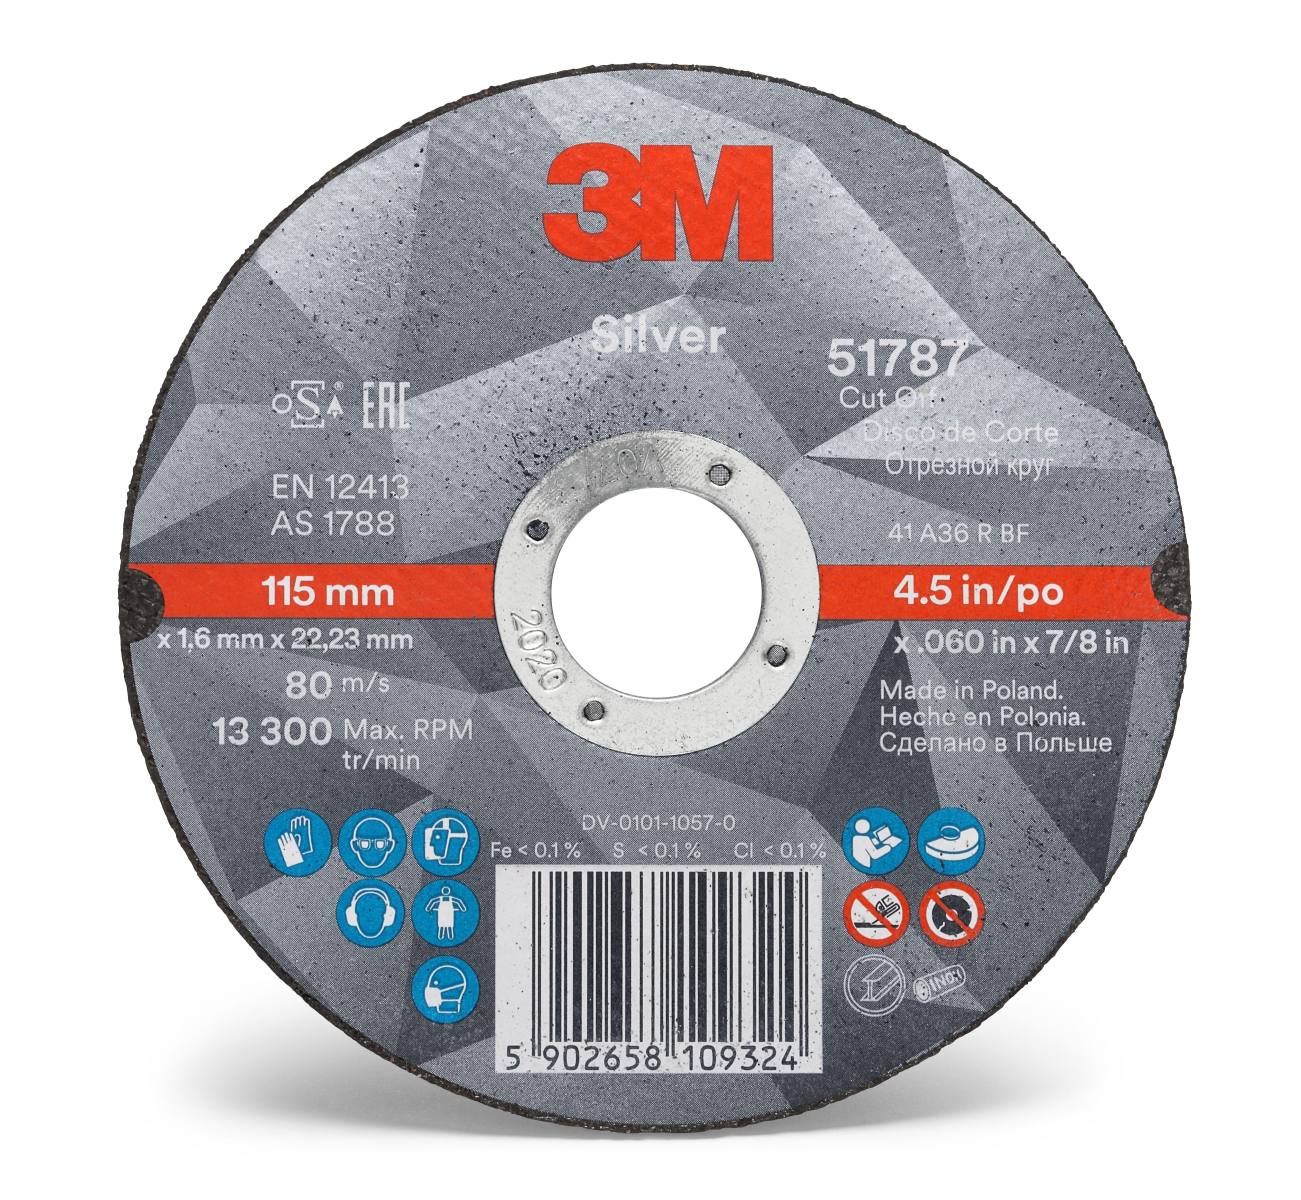 3M Silver Cut-Off Wheel Trennscheibe, 115 mm, 1,6 mm, 22,23 mm, T41, 51787